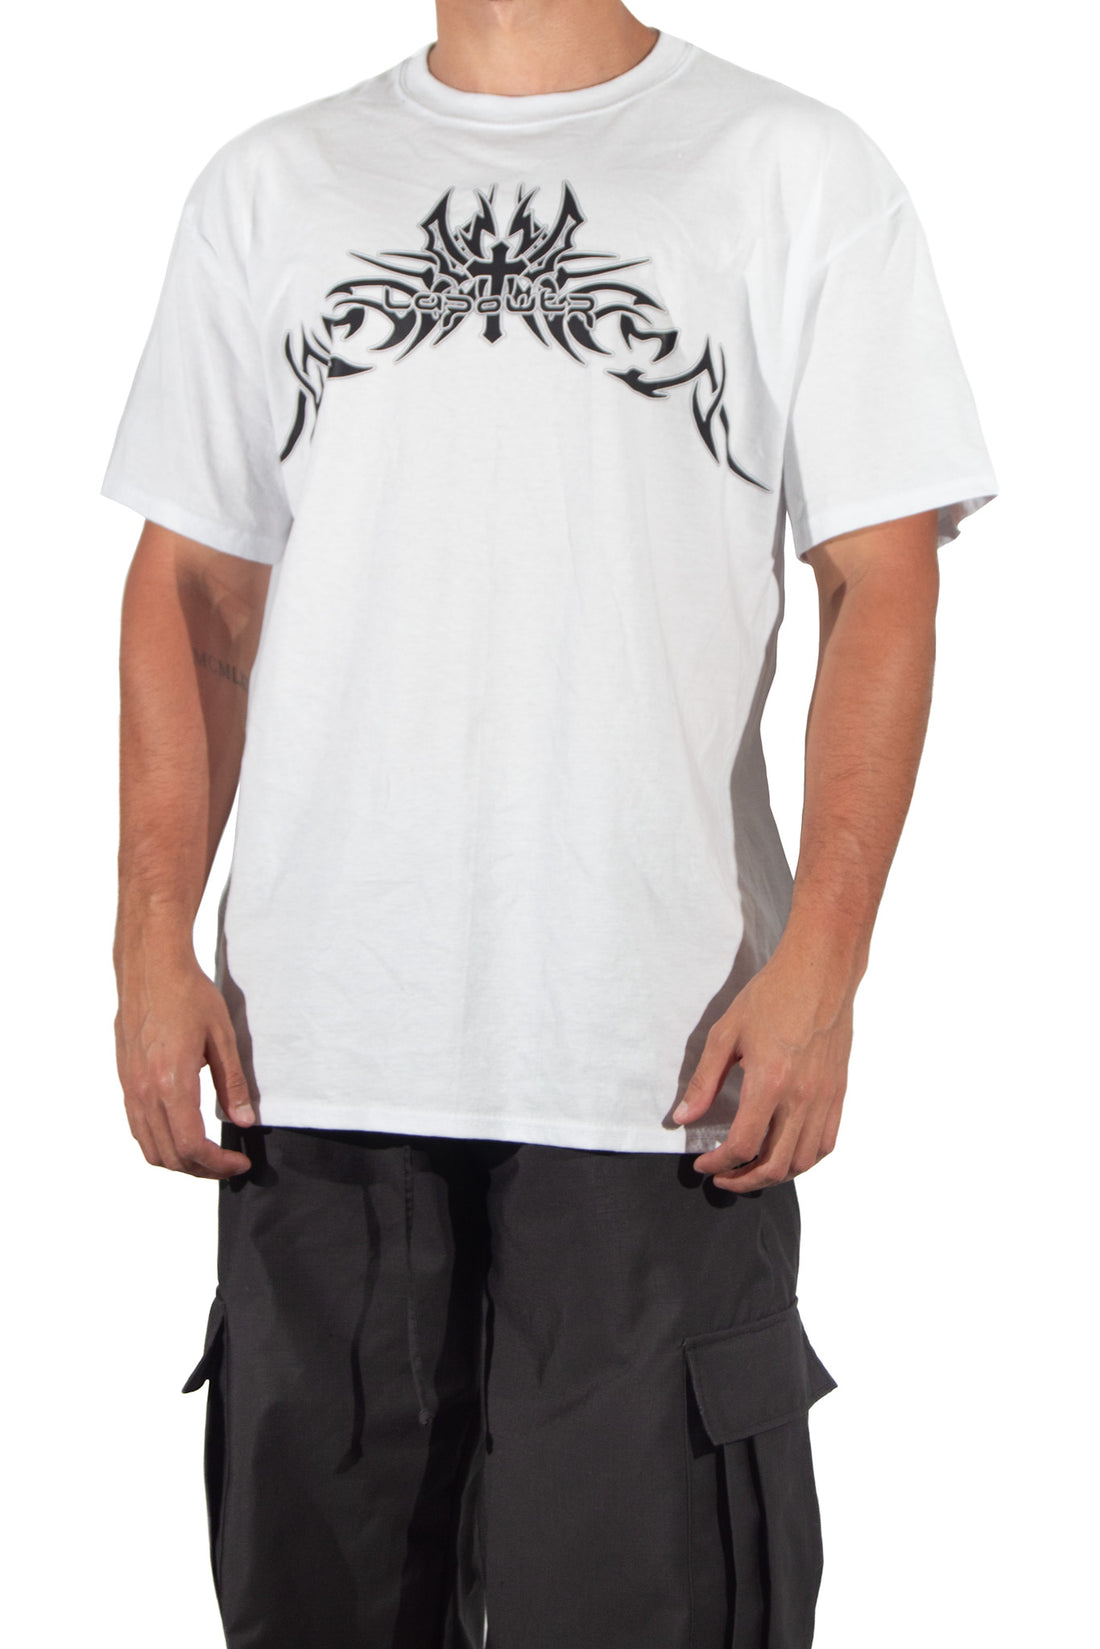 Power Tribal White T-Shirt